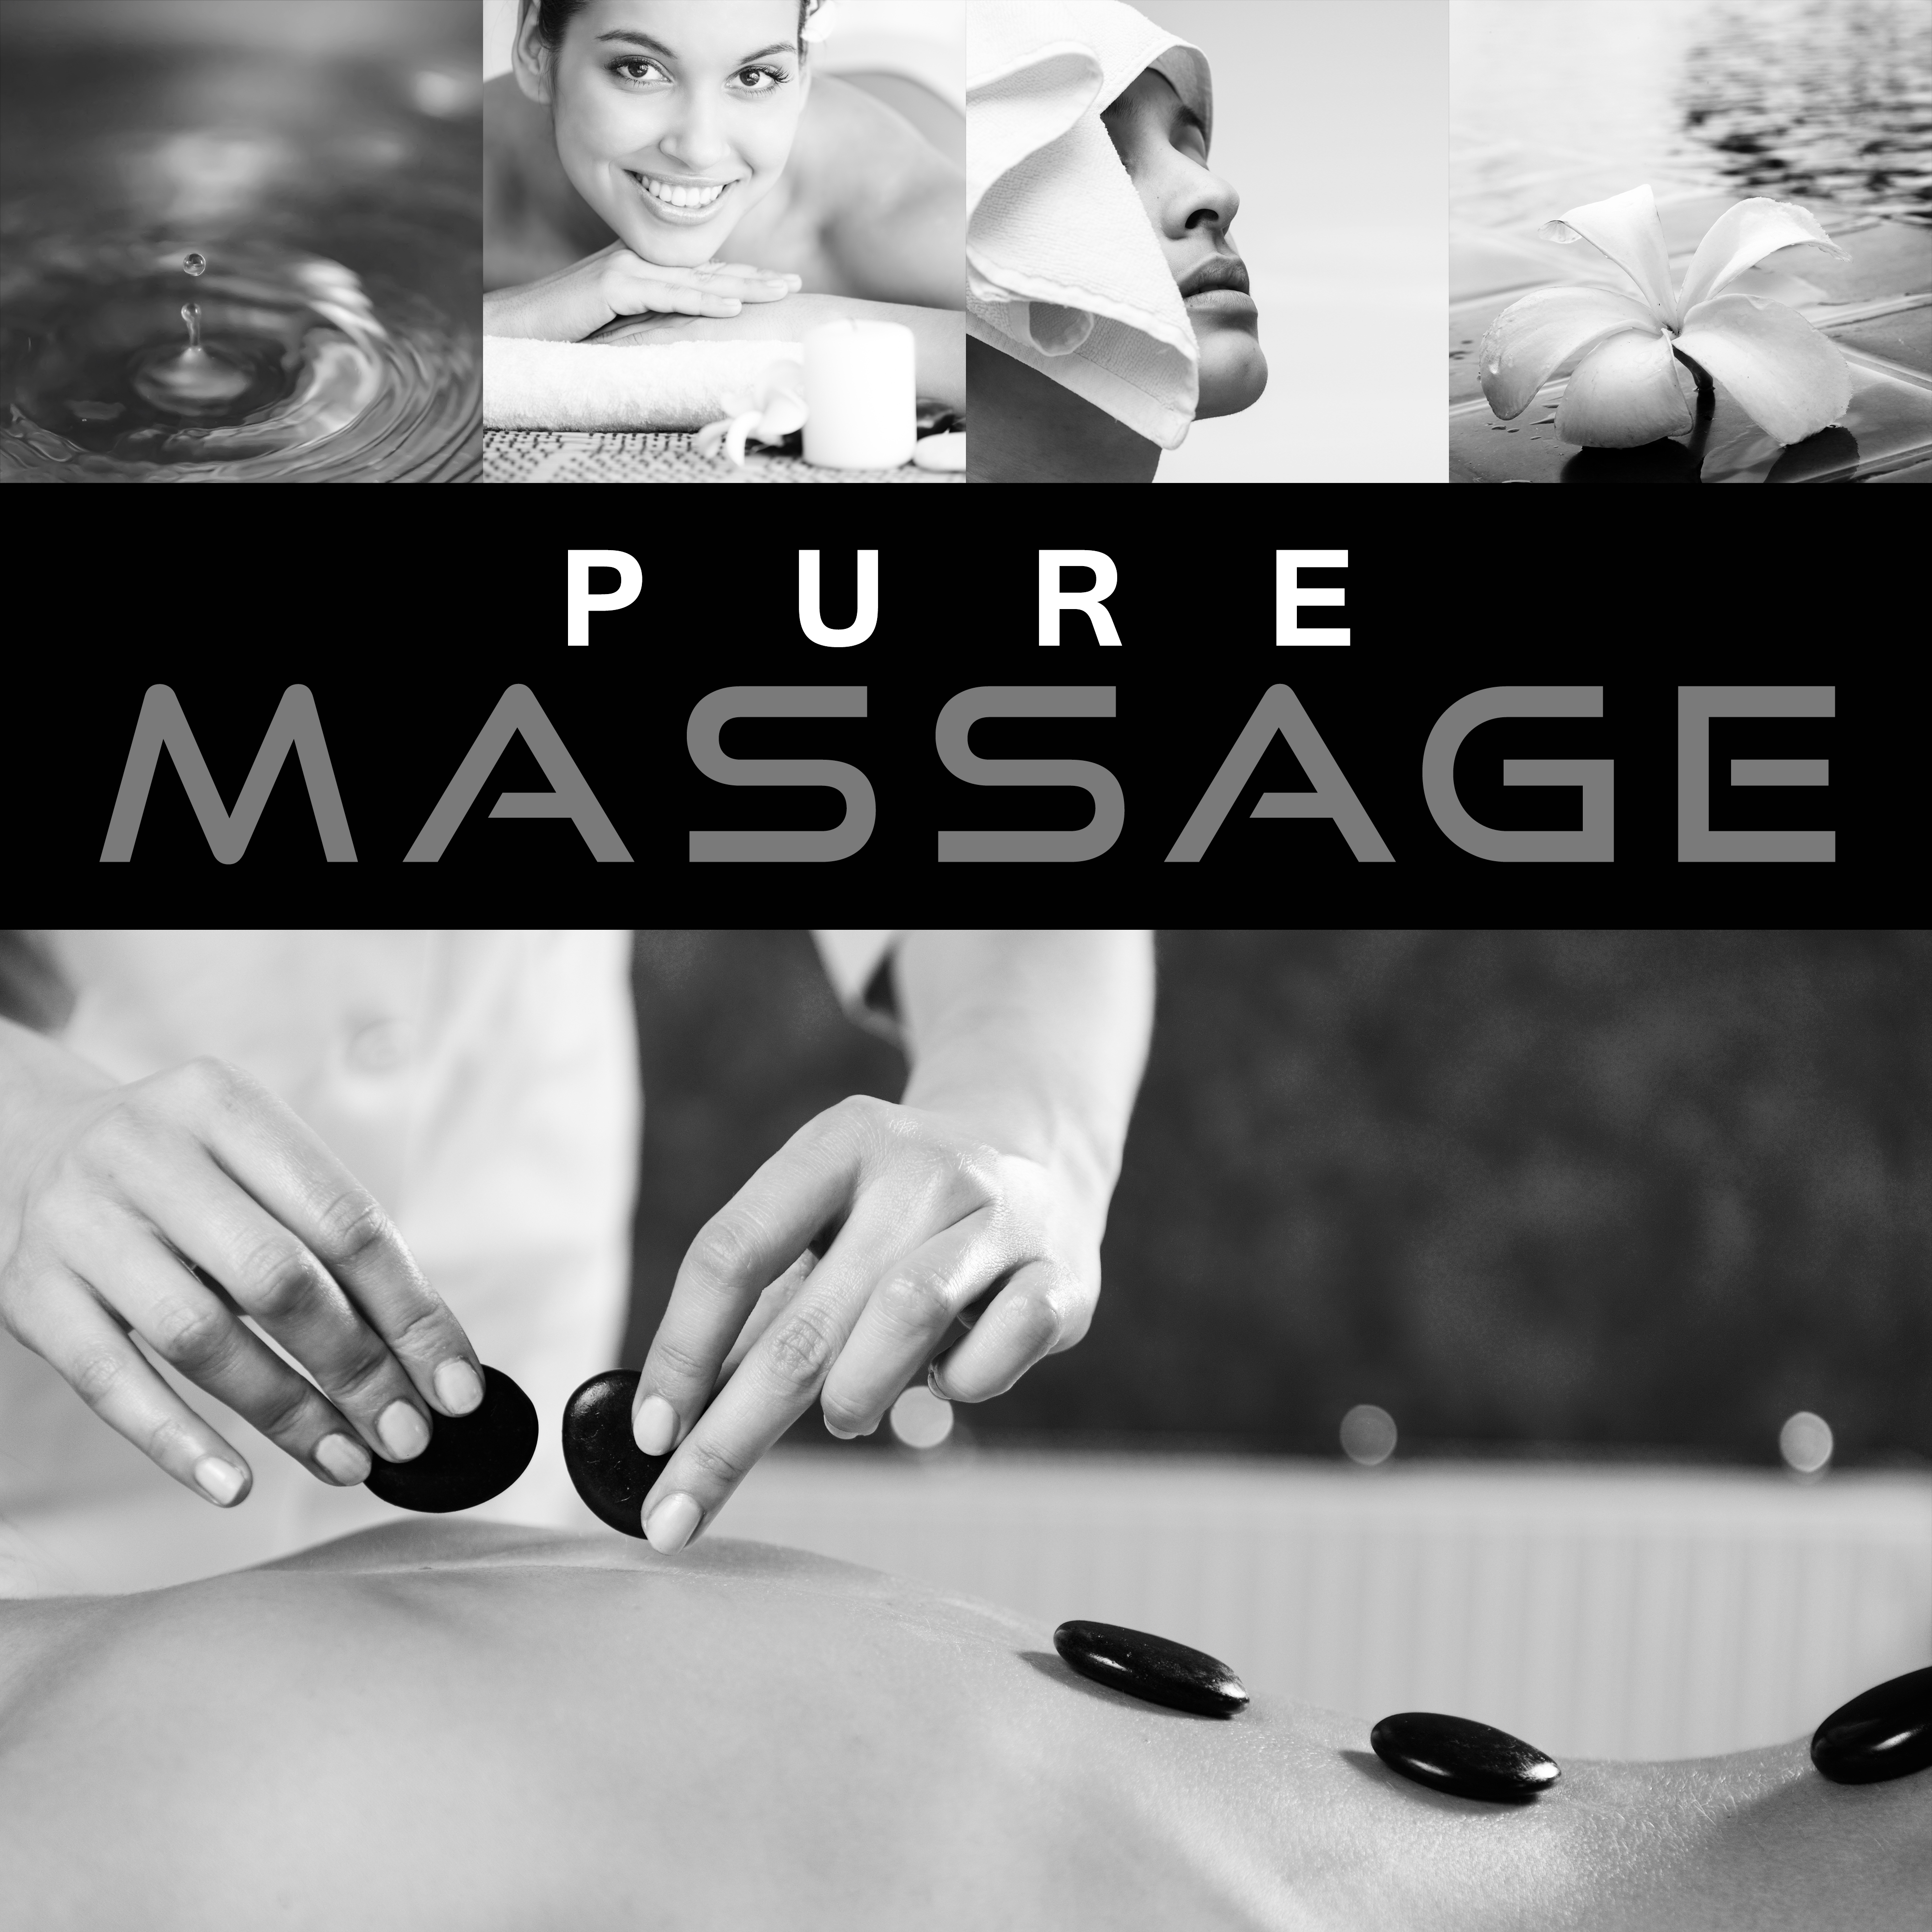 Pure Massage – Calming Nature Sounds, Relax, Spa, Massage, Wellness, Zen Therapy Music